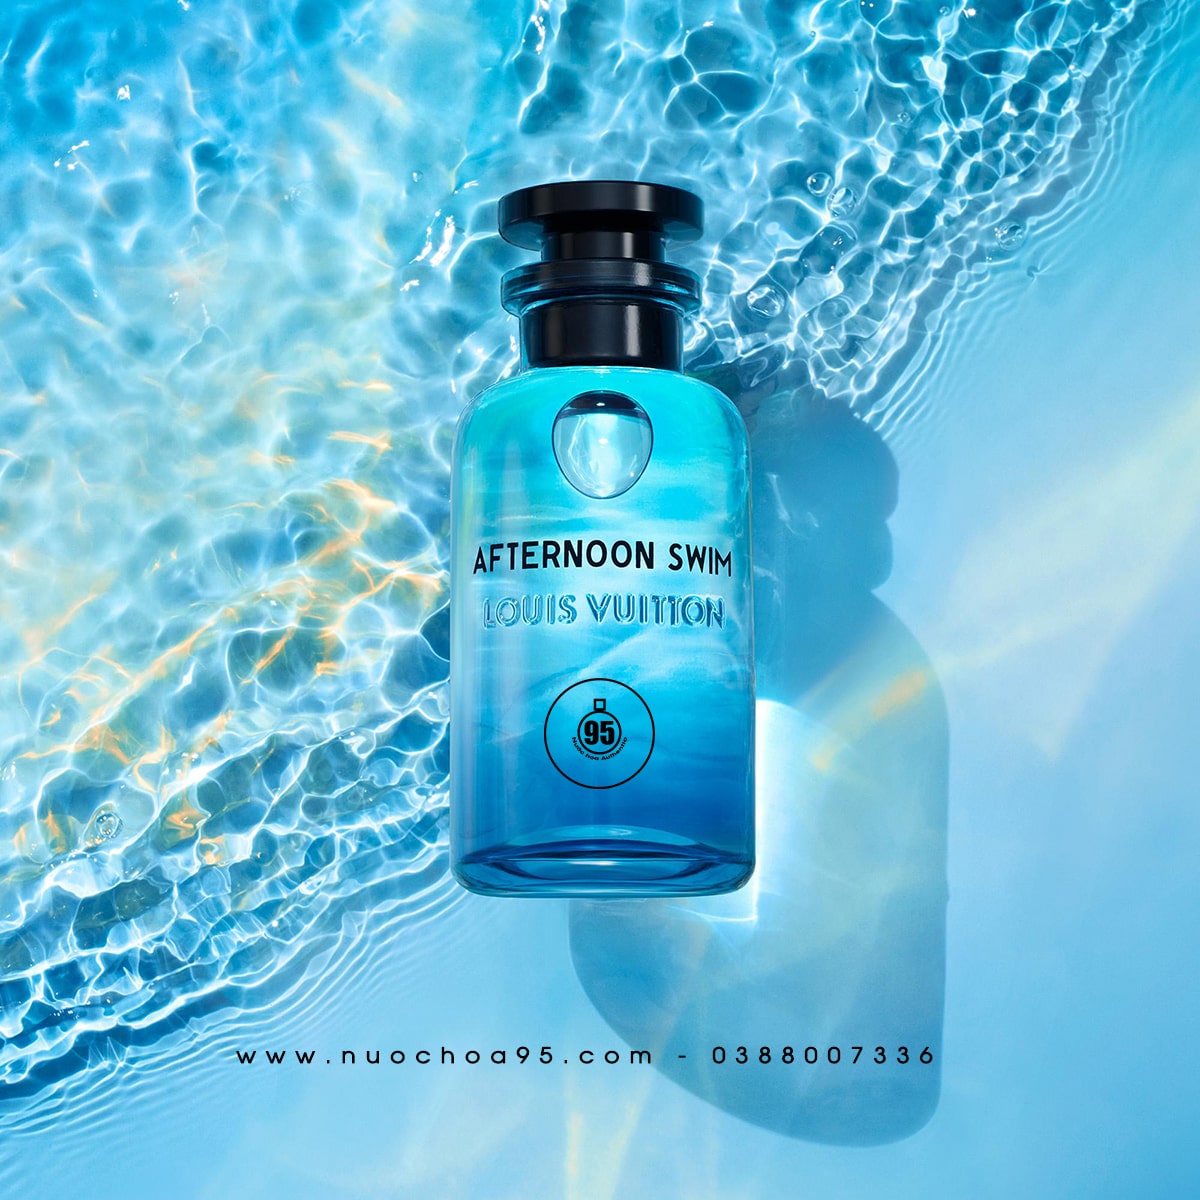 Nước hoa Louis Vuitton Afternoon Swim - Ảnh 1